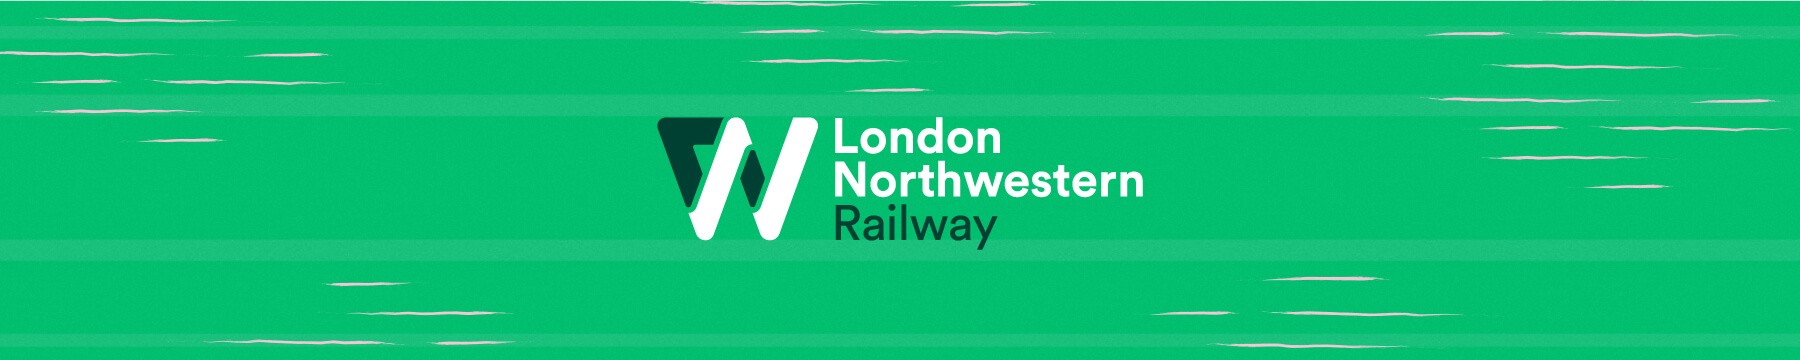 london northwestern railway logo banner